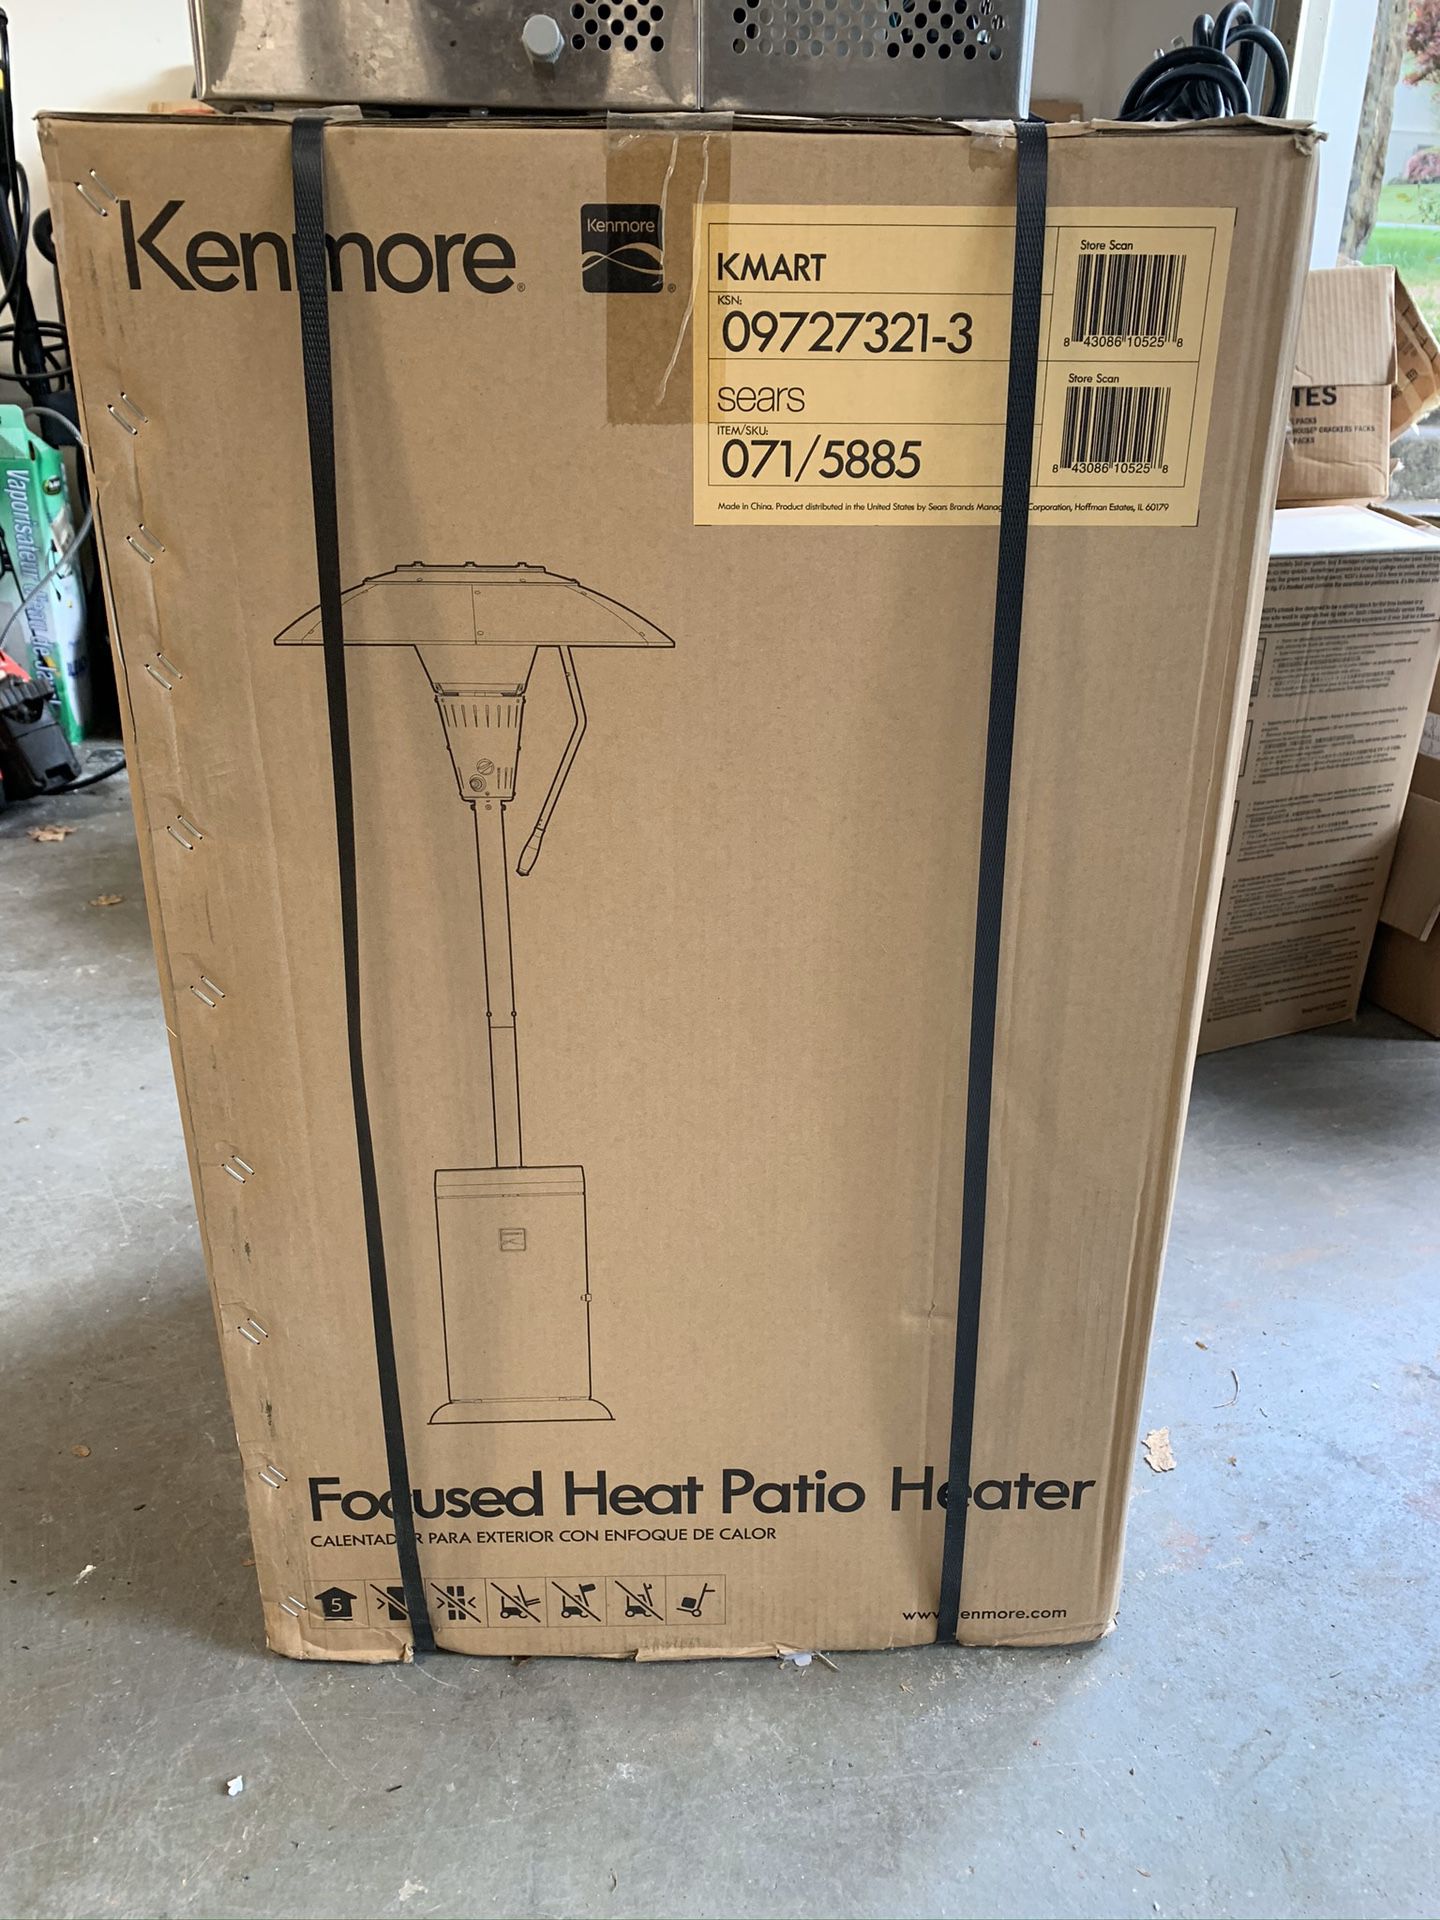 Kenmore Patio Heater